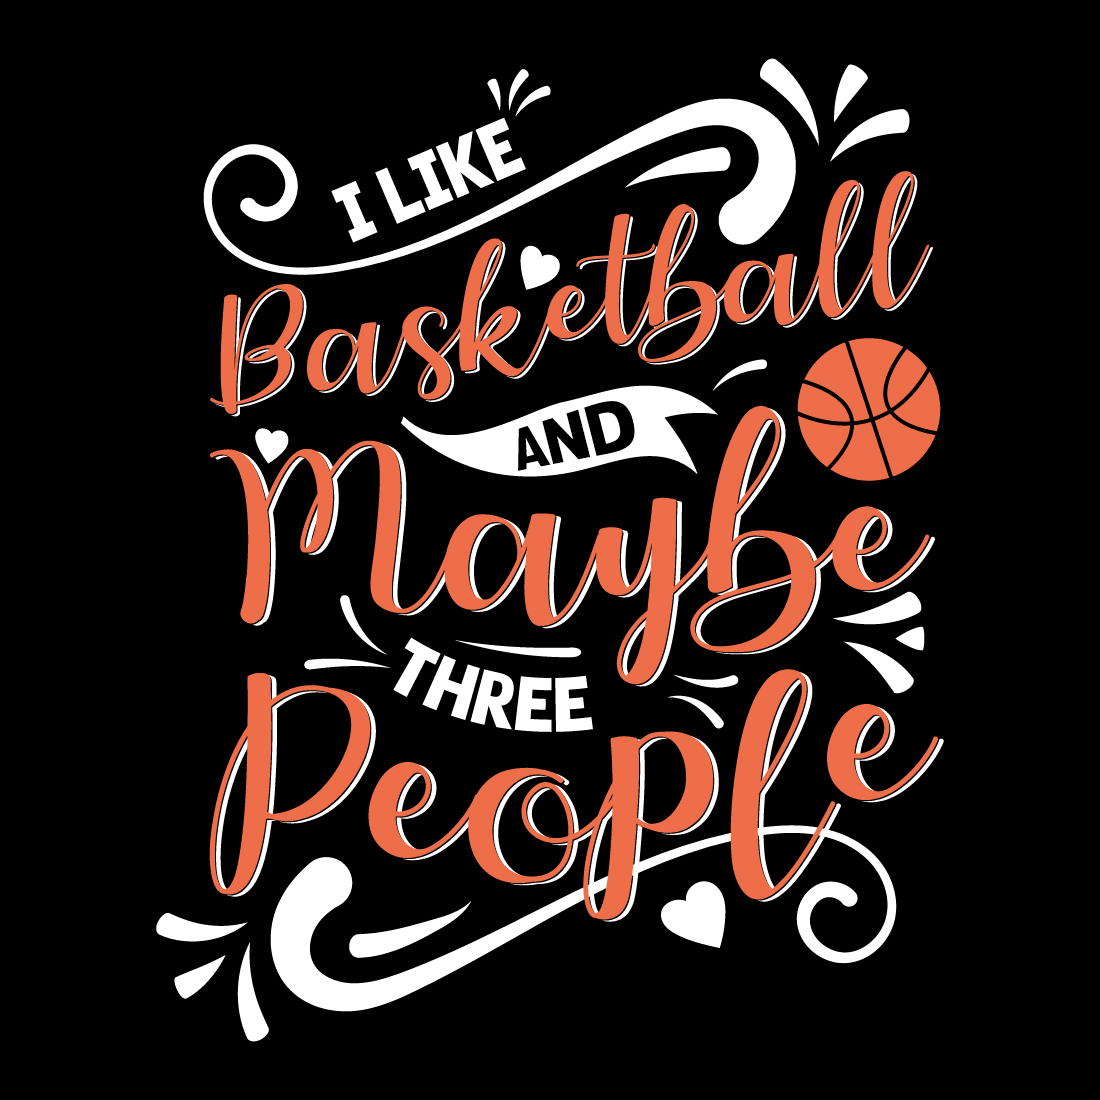 I like basketball and maybe three people.